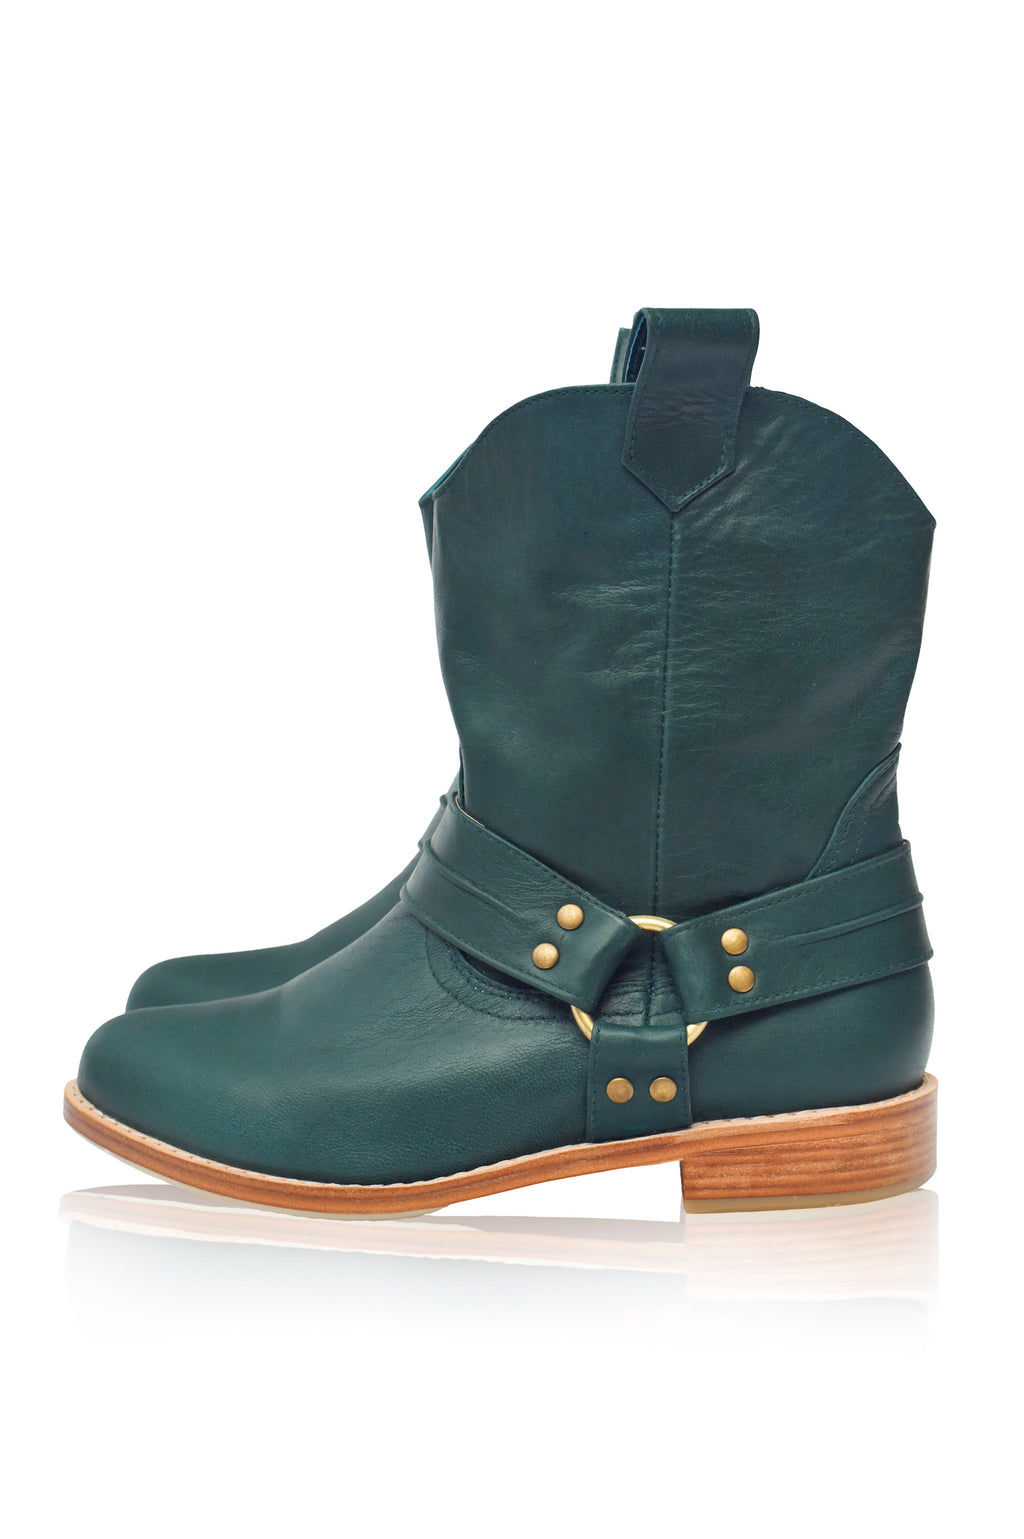 Cali Leather Boots (Sz. 5 & 7.5)